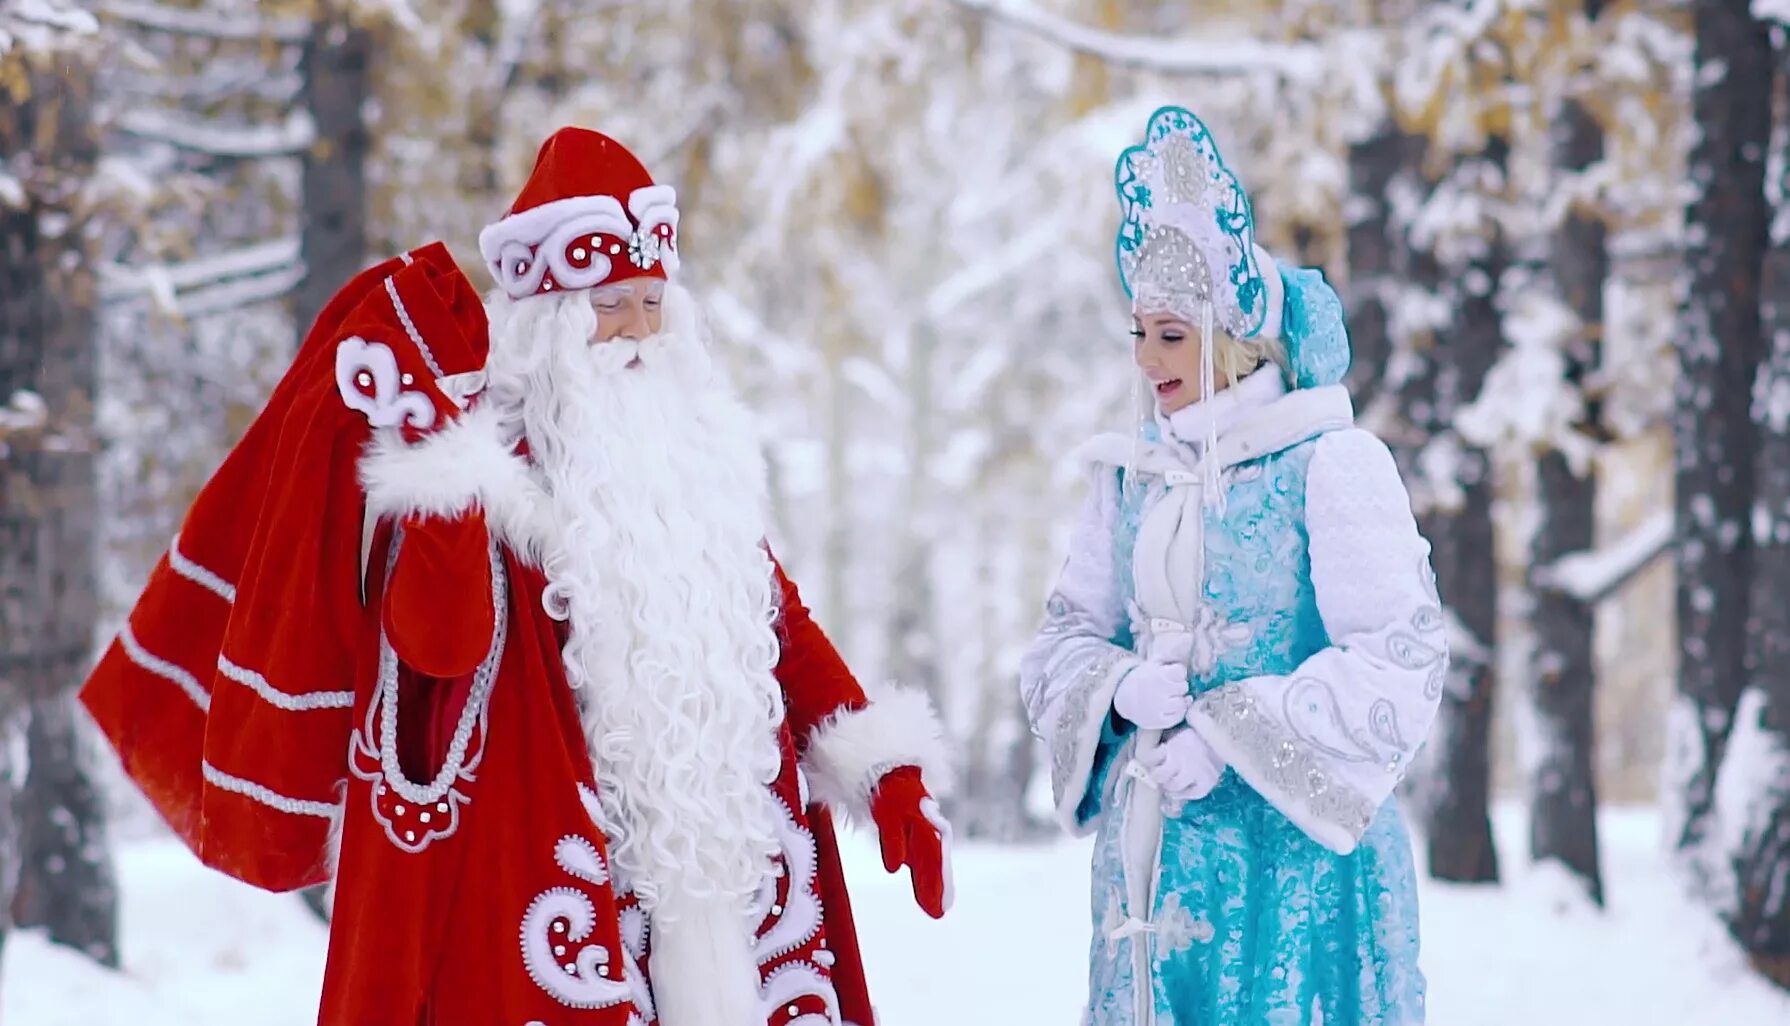 Покажи снегурочку дед мороза. Дед Мороз и Снегурочка. Дед Мороз ииснегурочка. Русский дед Мороз. Дед морое и Снегурочка.